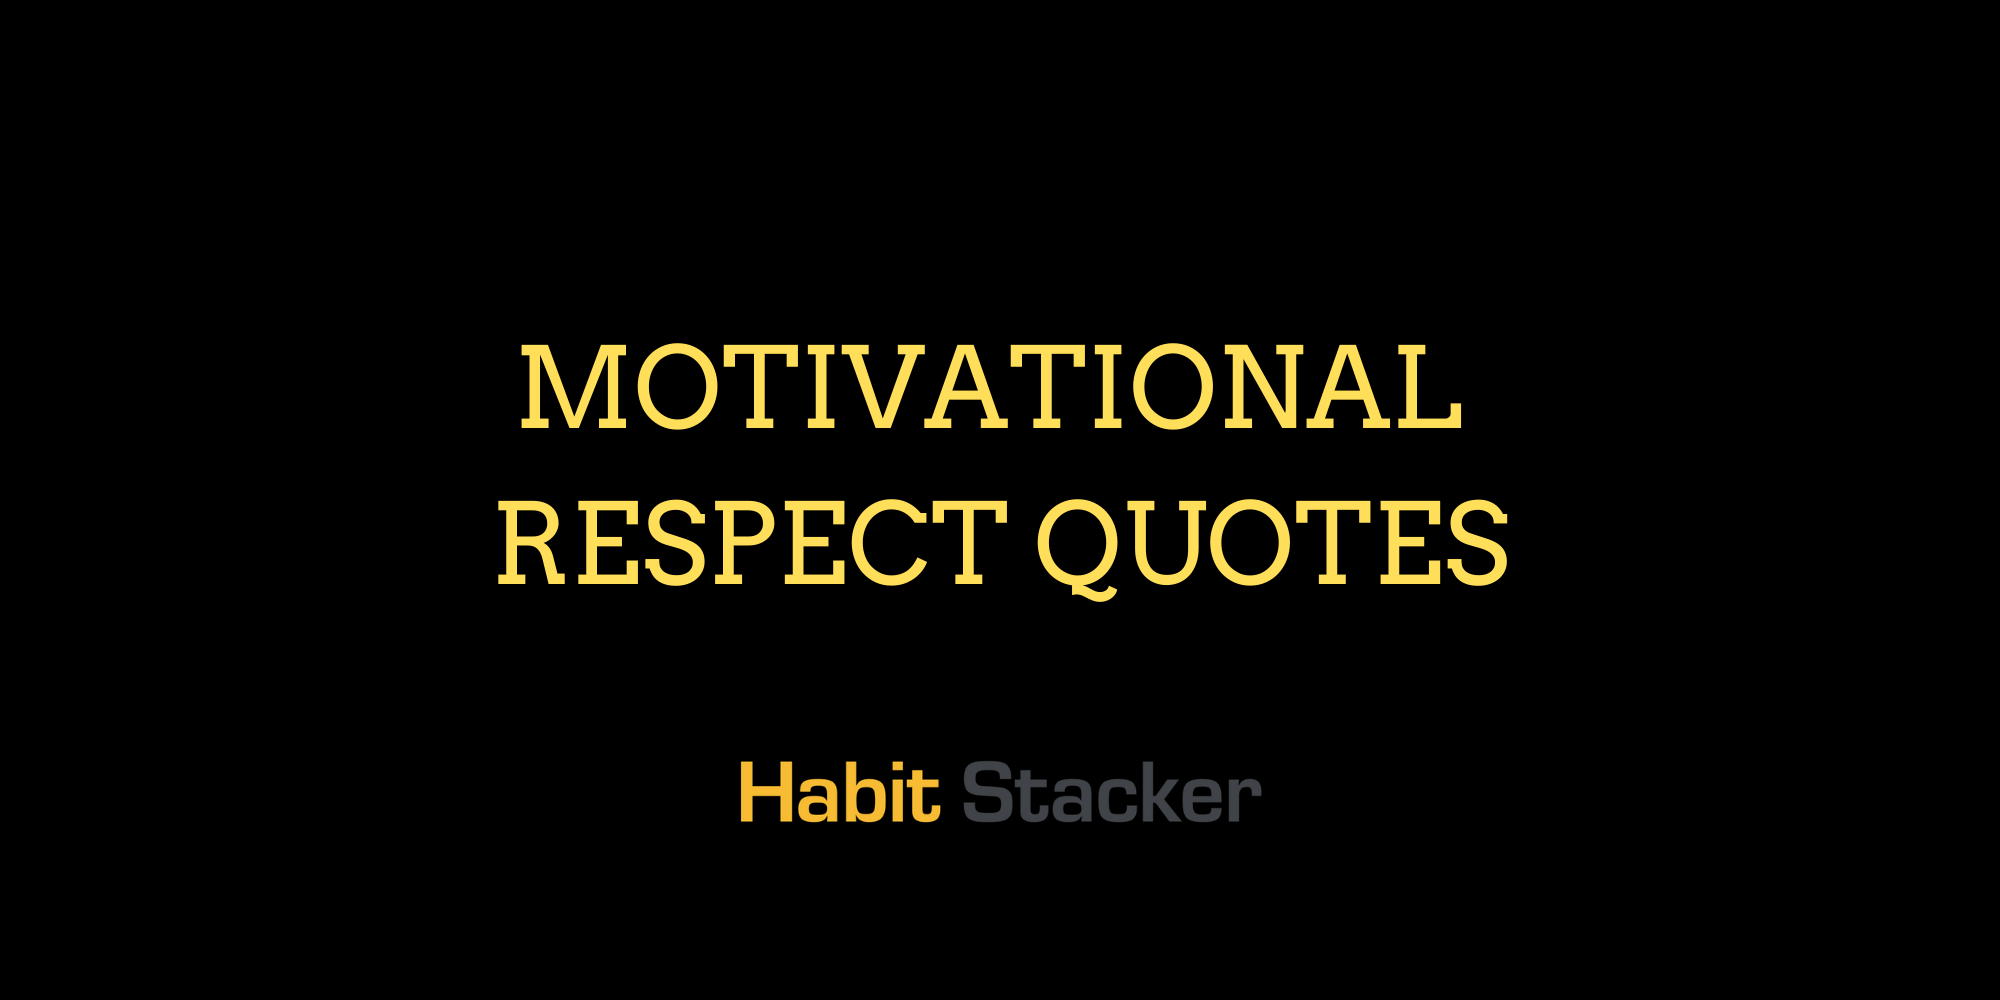 50 Motivational Respect Quotes | Habit Stacker